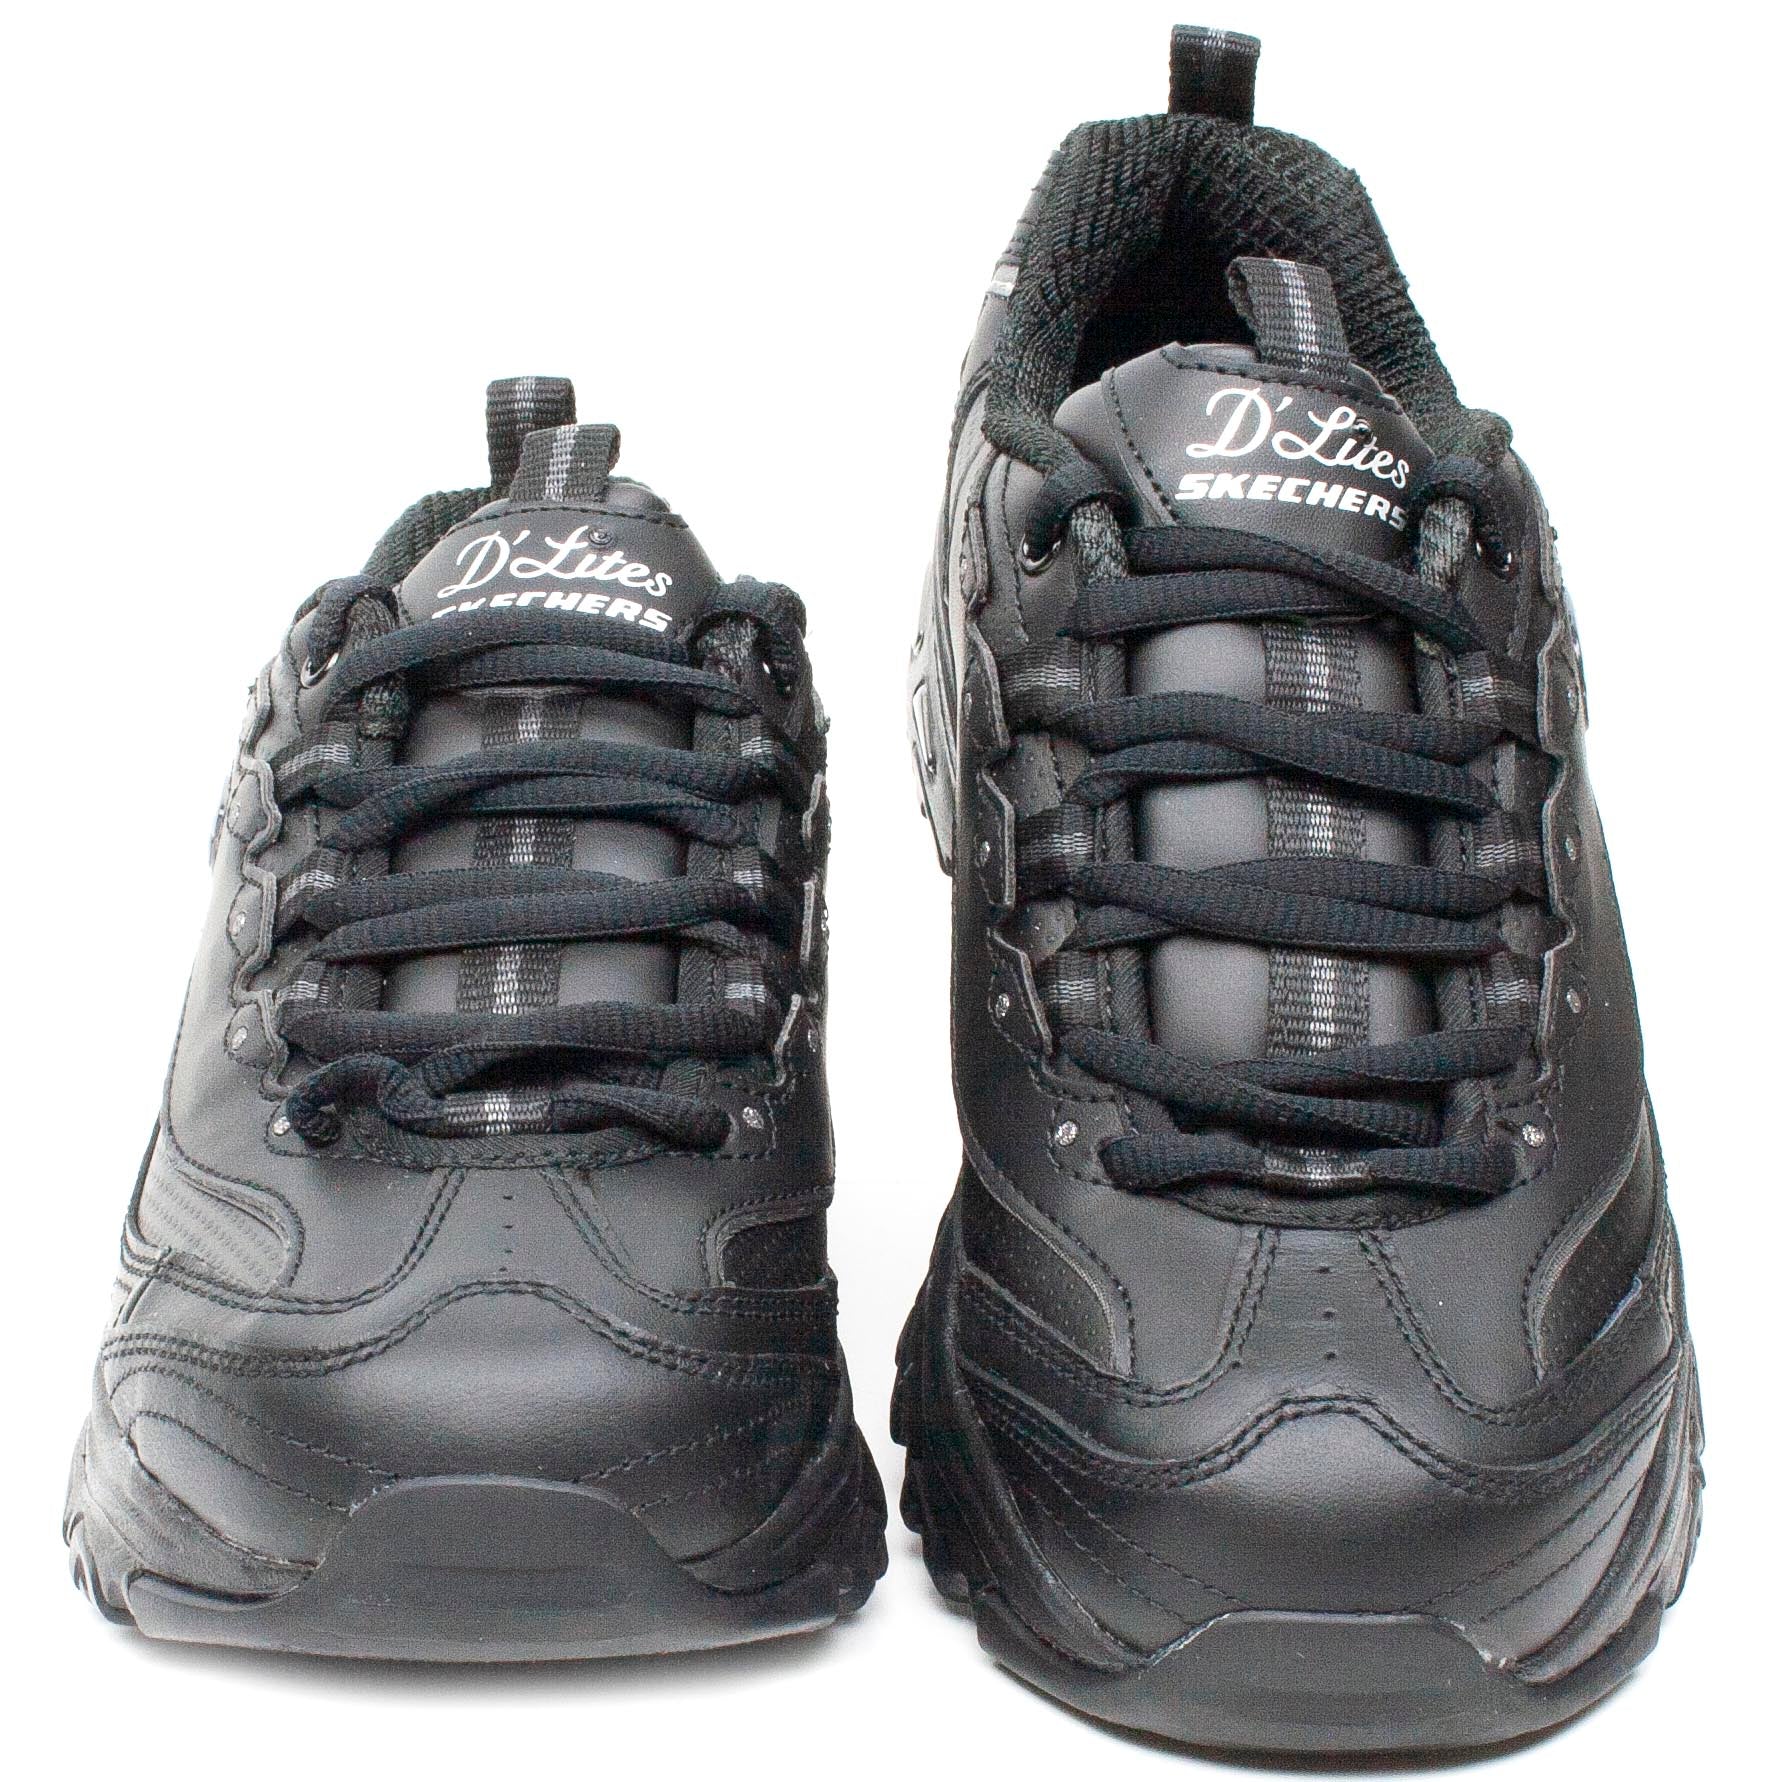 Skechers pantofi dama sport 11931 negru ID2616-NG